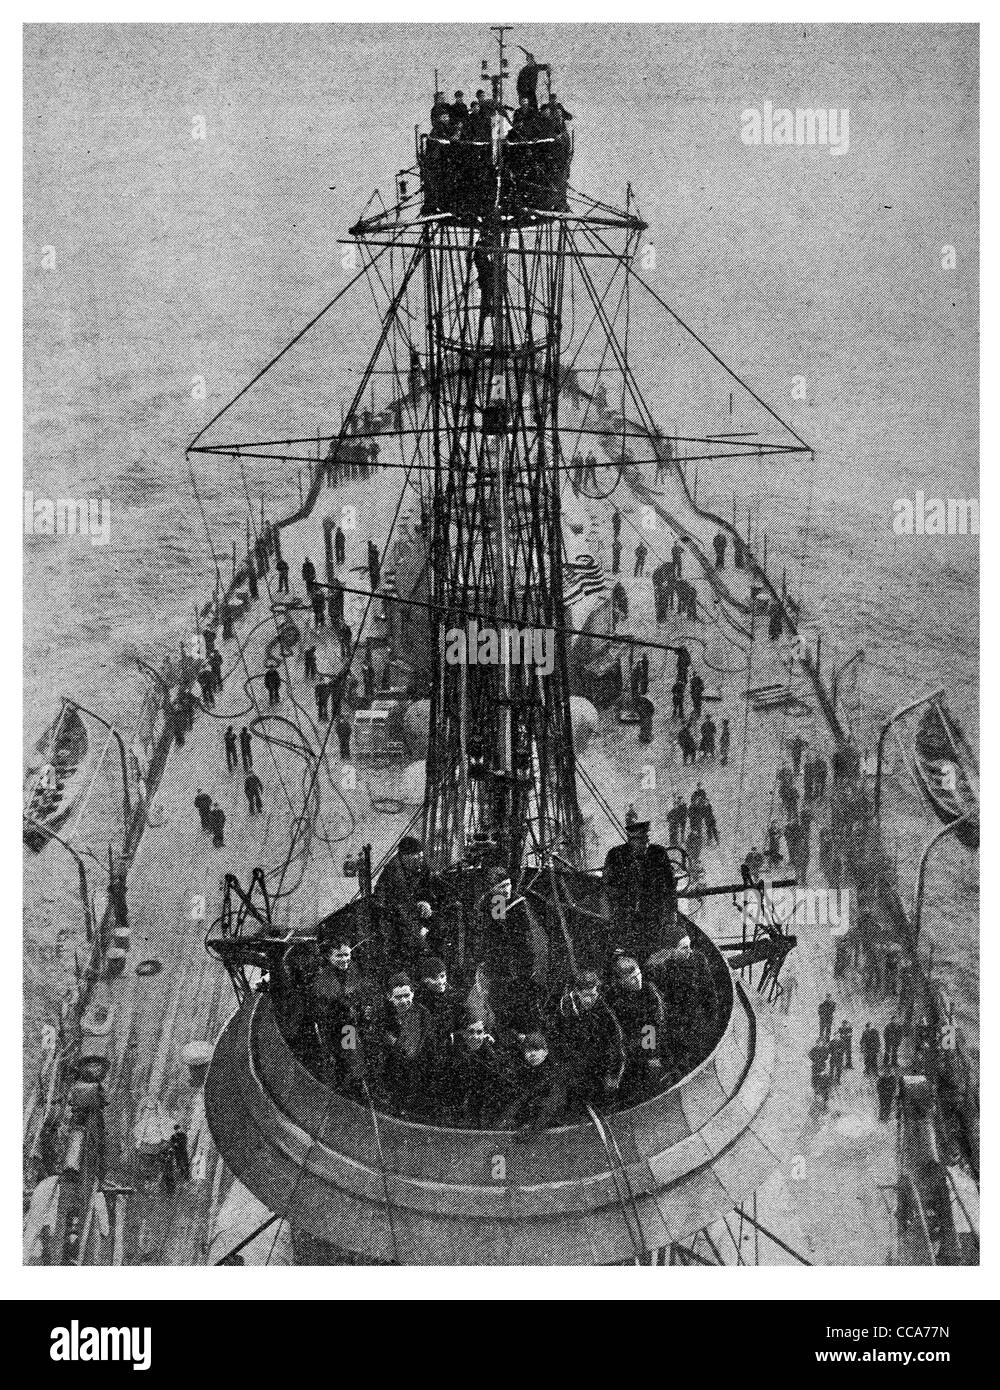 New York 1917 cuirassé dreadnought de classe super cuirassé United States Navy Océan Atlantique l'escorte de convois alliés ship Banque D'Images